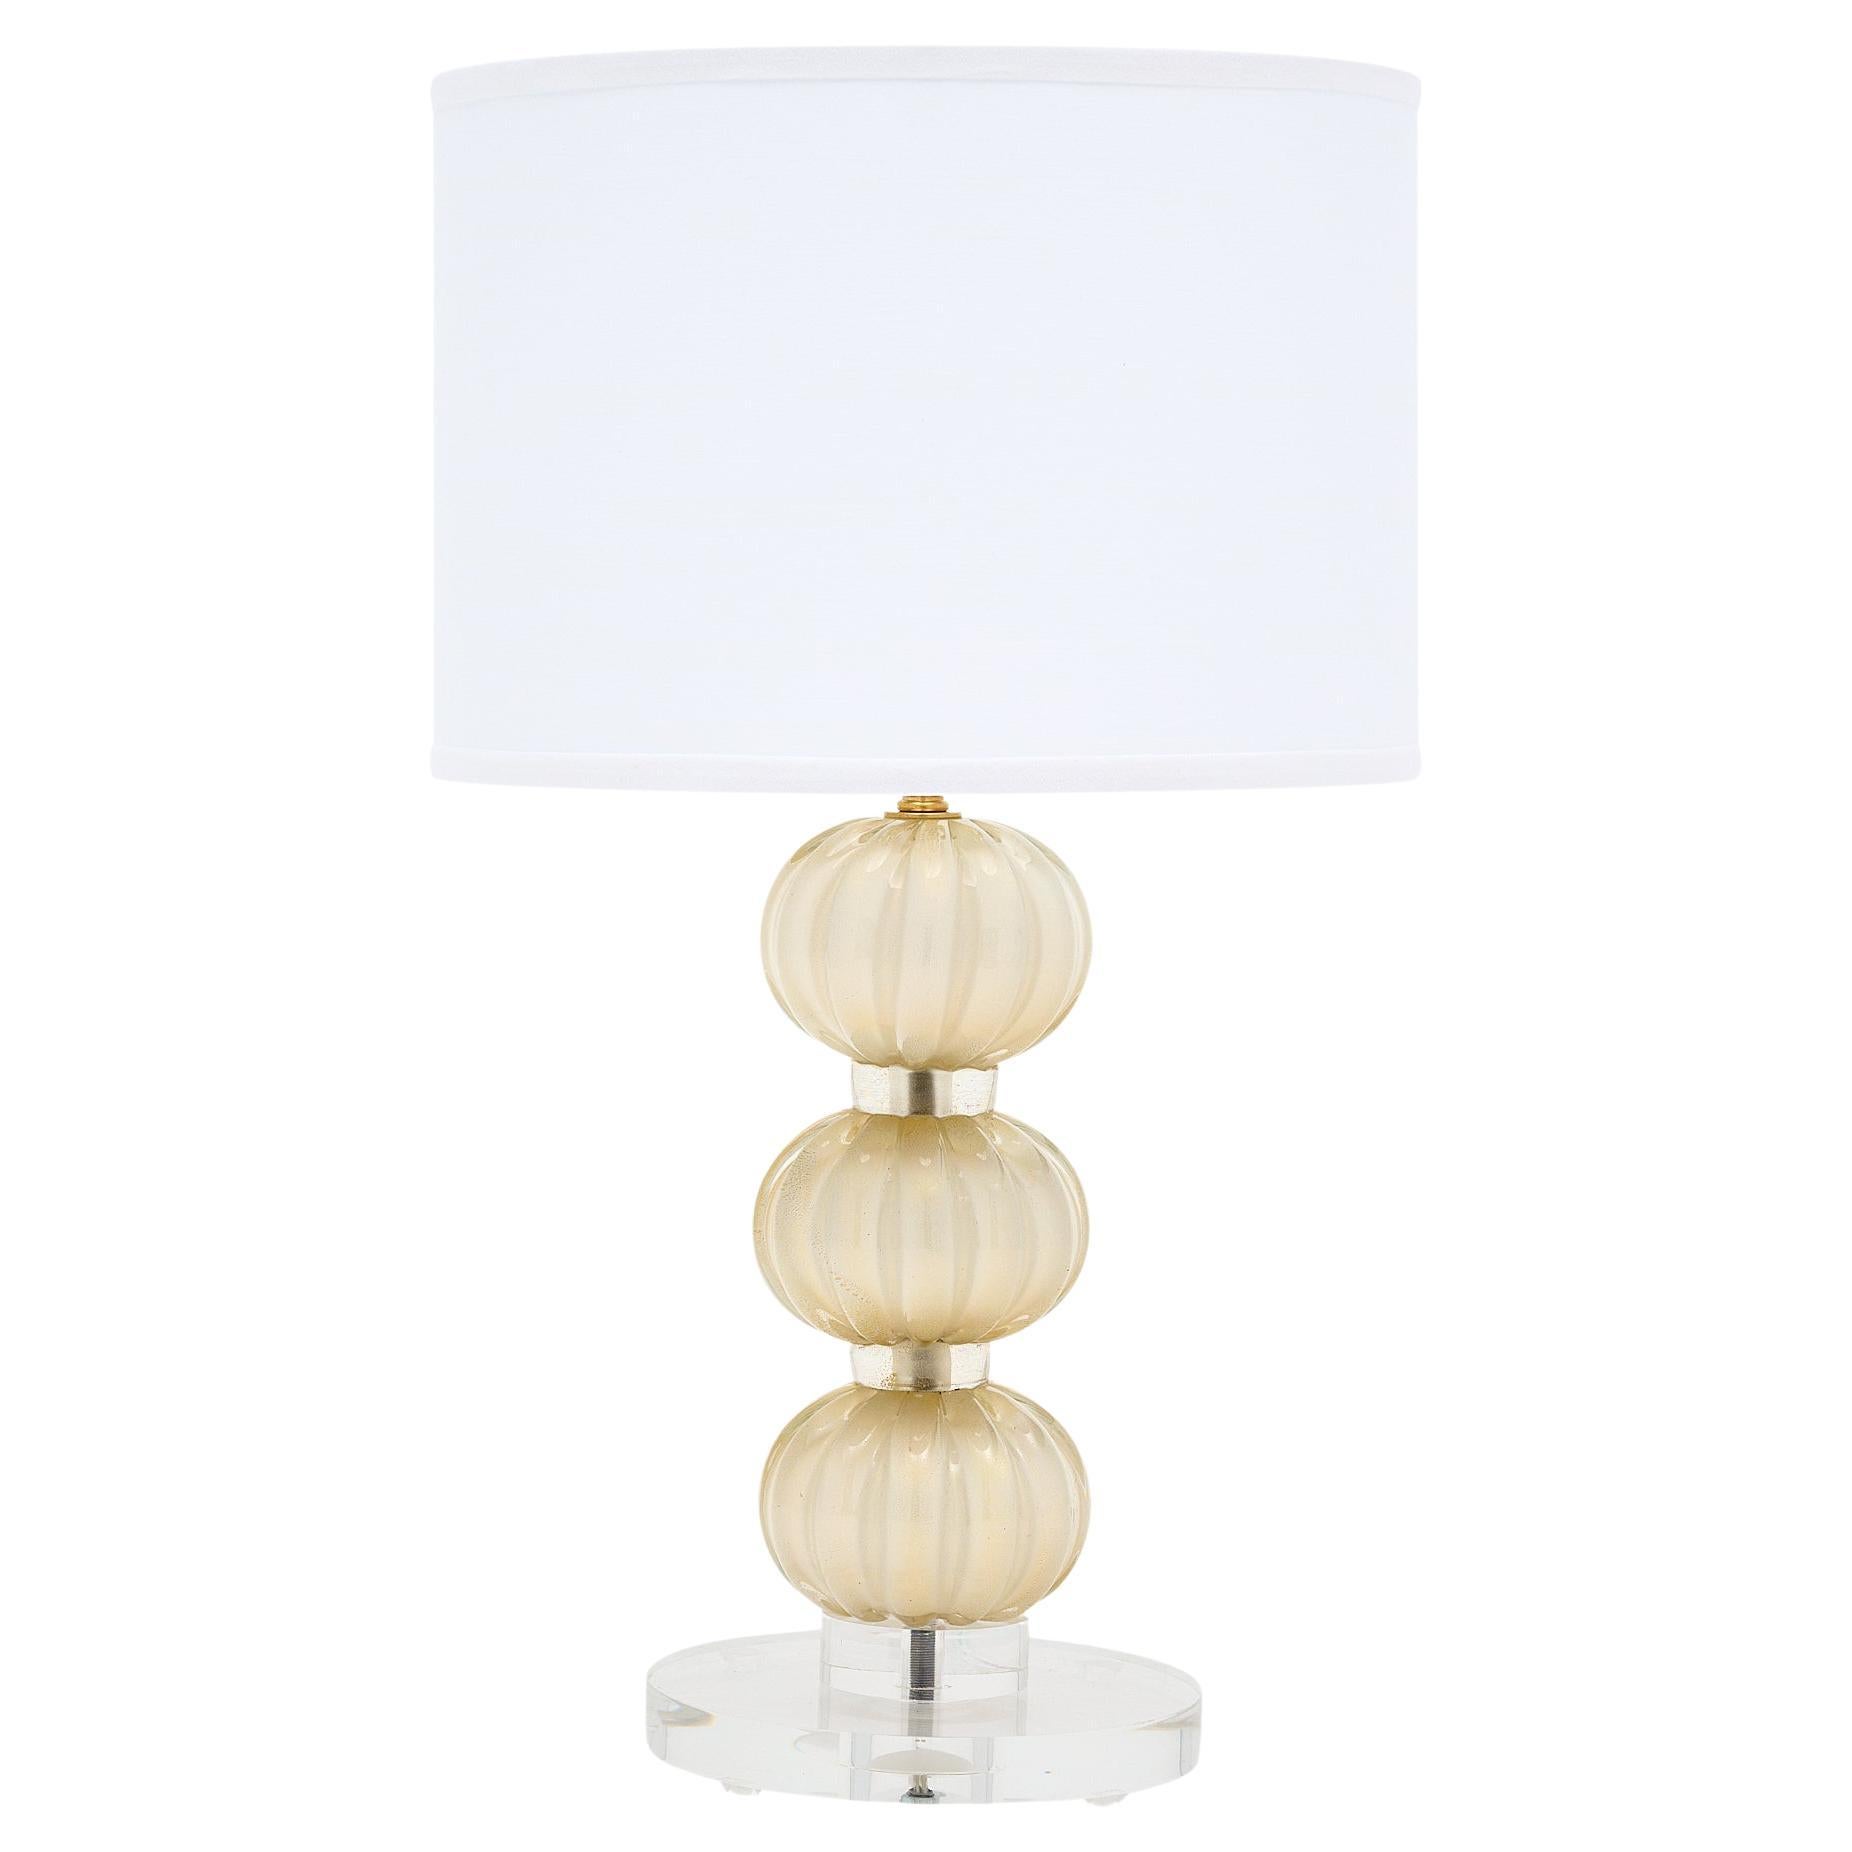 Lampe simple en verre de Murano avec base en lucite